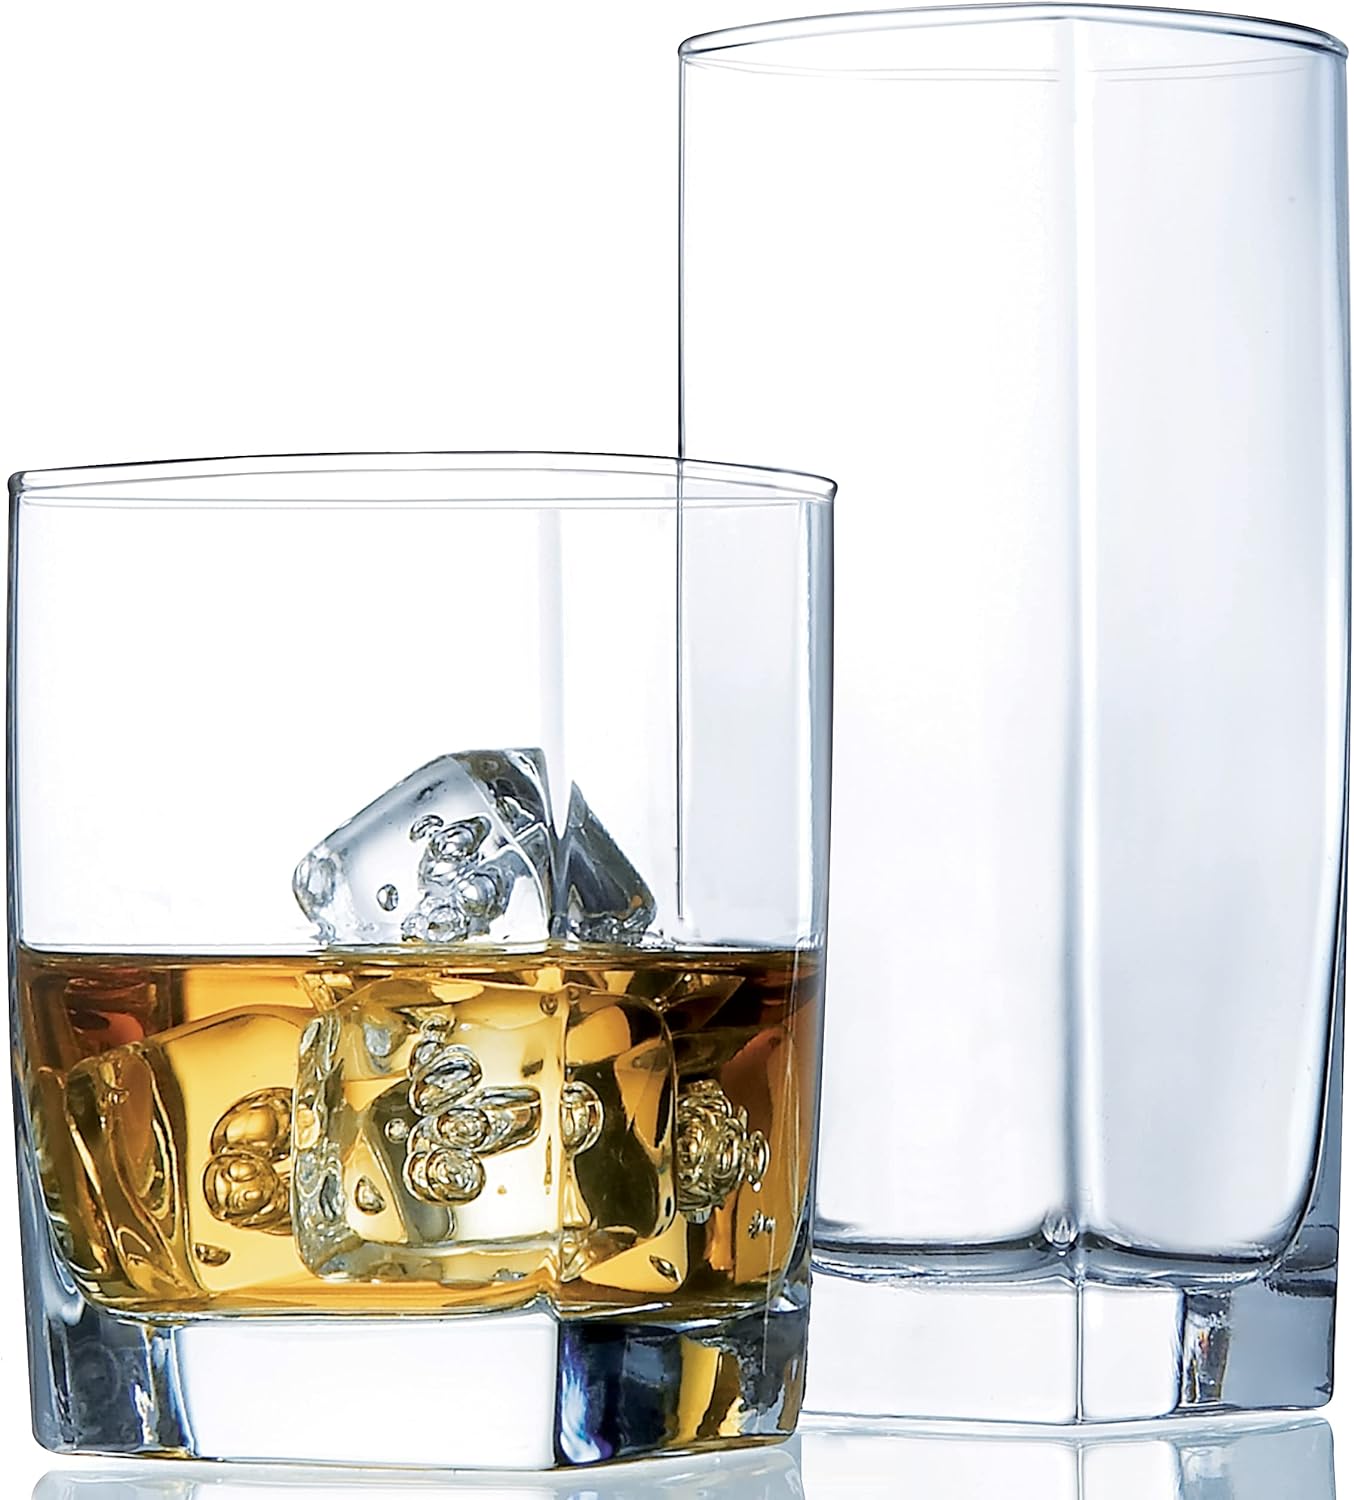 Glaver's Drinking Glasses, 12 Pc. Glass Cups, Includes 4 Highball Glasses 17 oz., 4 Rocks Glasses, 13 oz., 4 Juice Glasses, 4.5 oz., Whisky, Juice